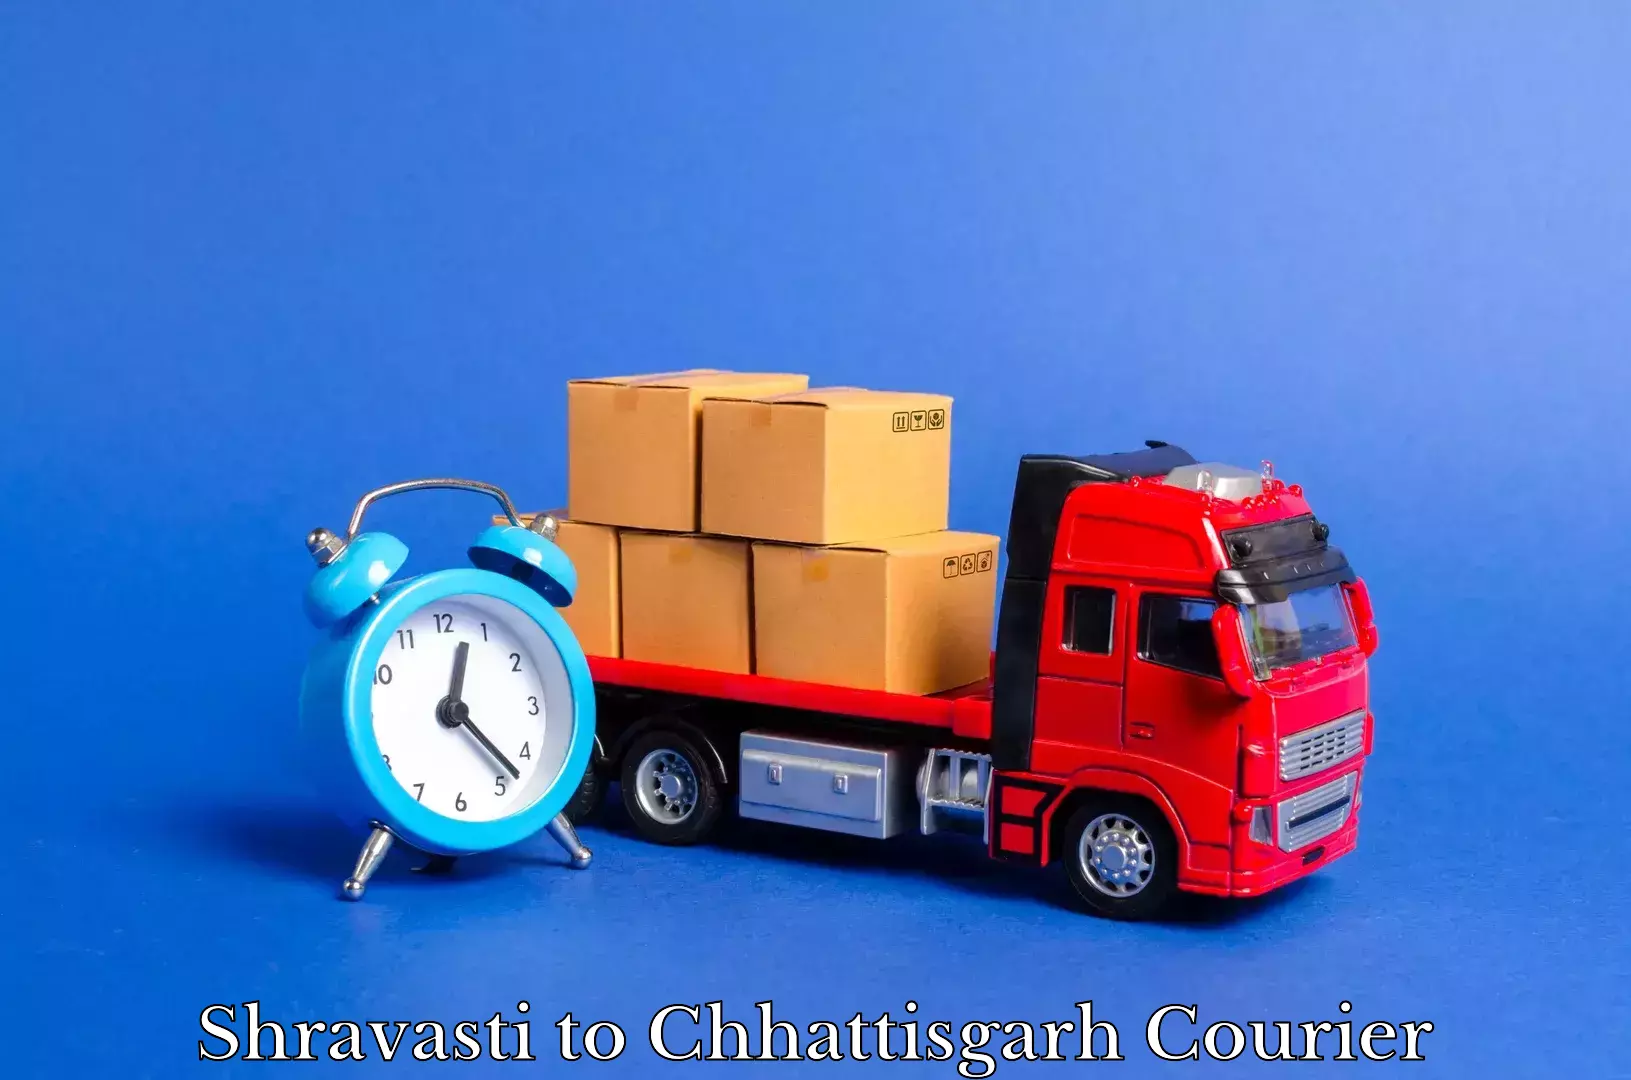 Specialized moving company Shravasti to Patna Chhattisgarh